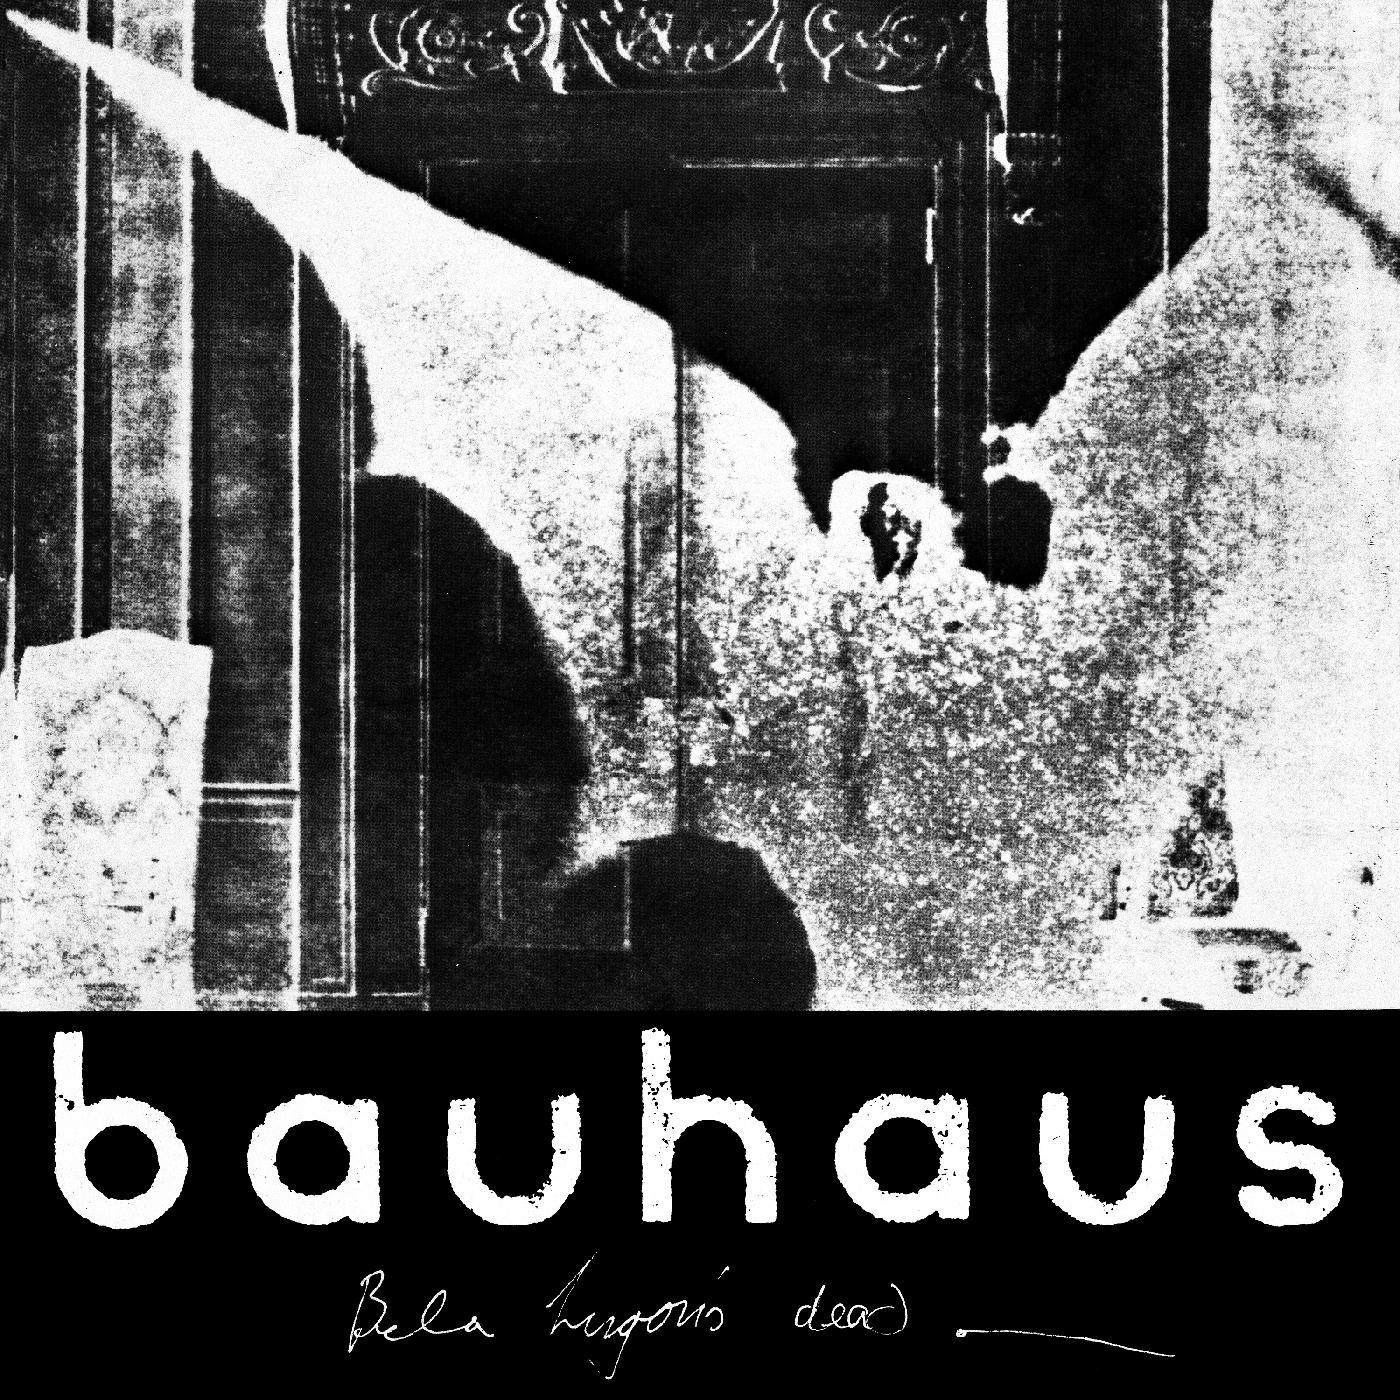 Bauhaus BELA SESSION Vinyl Record